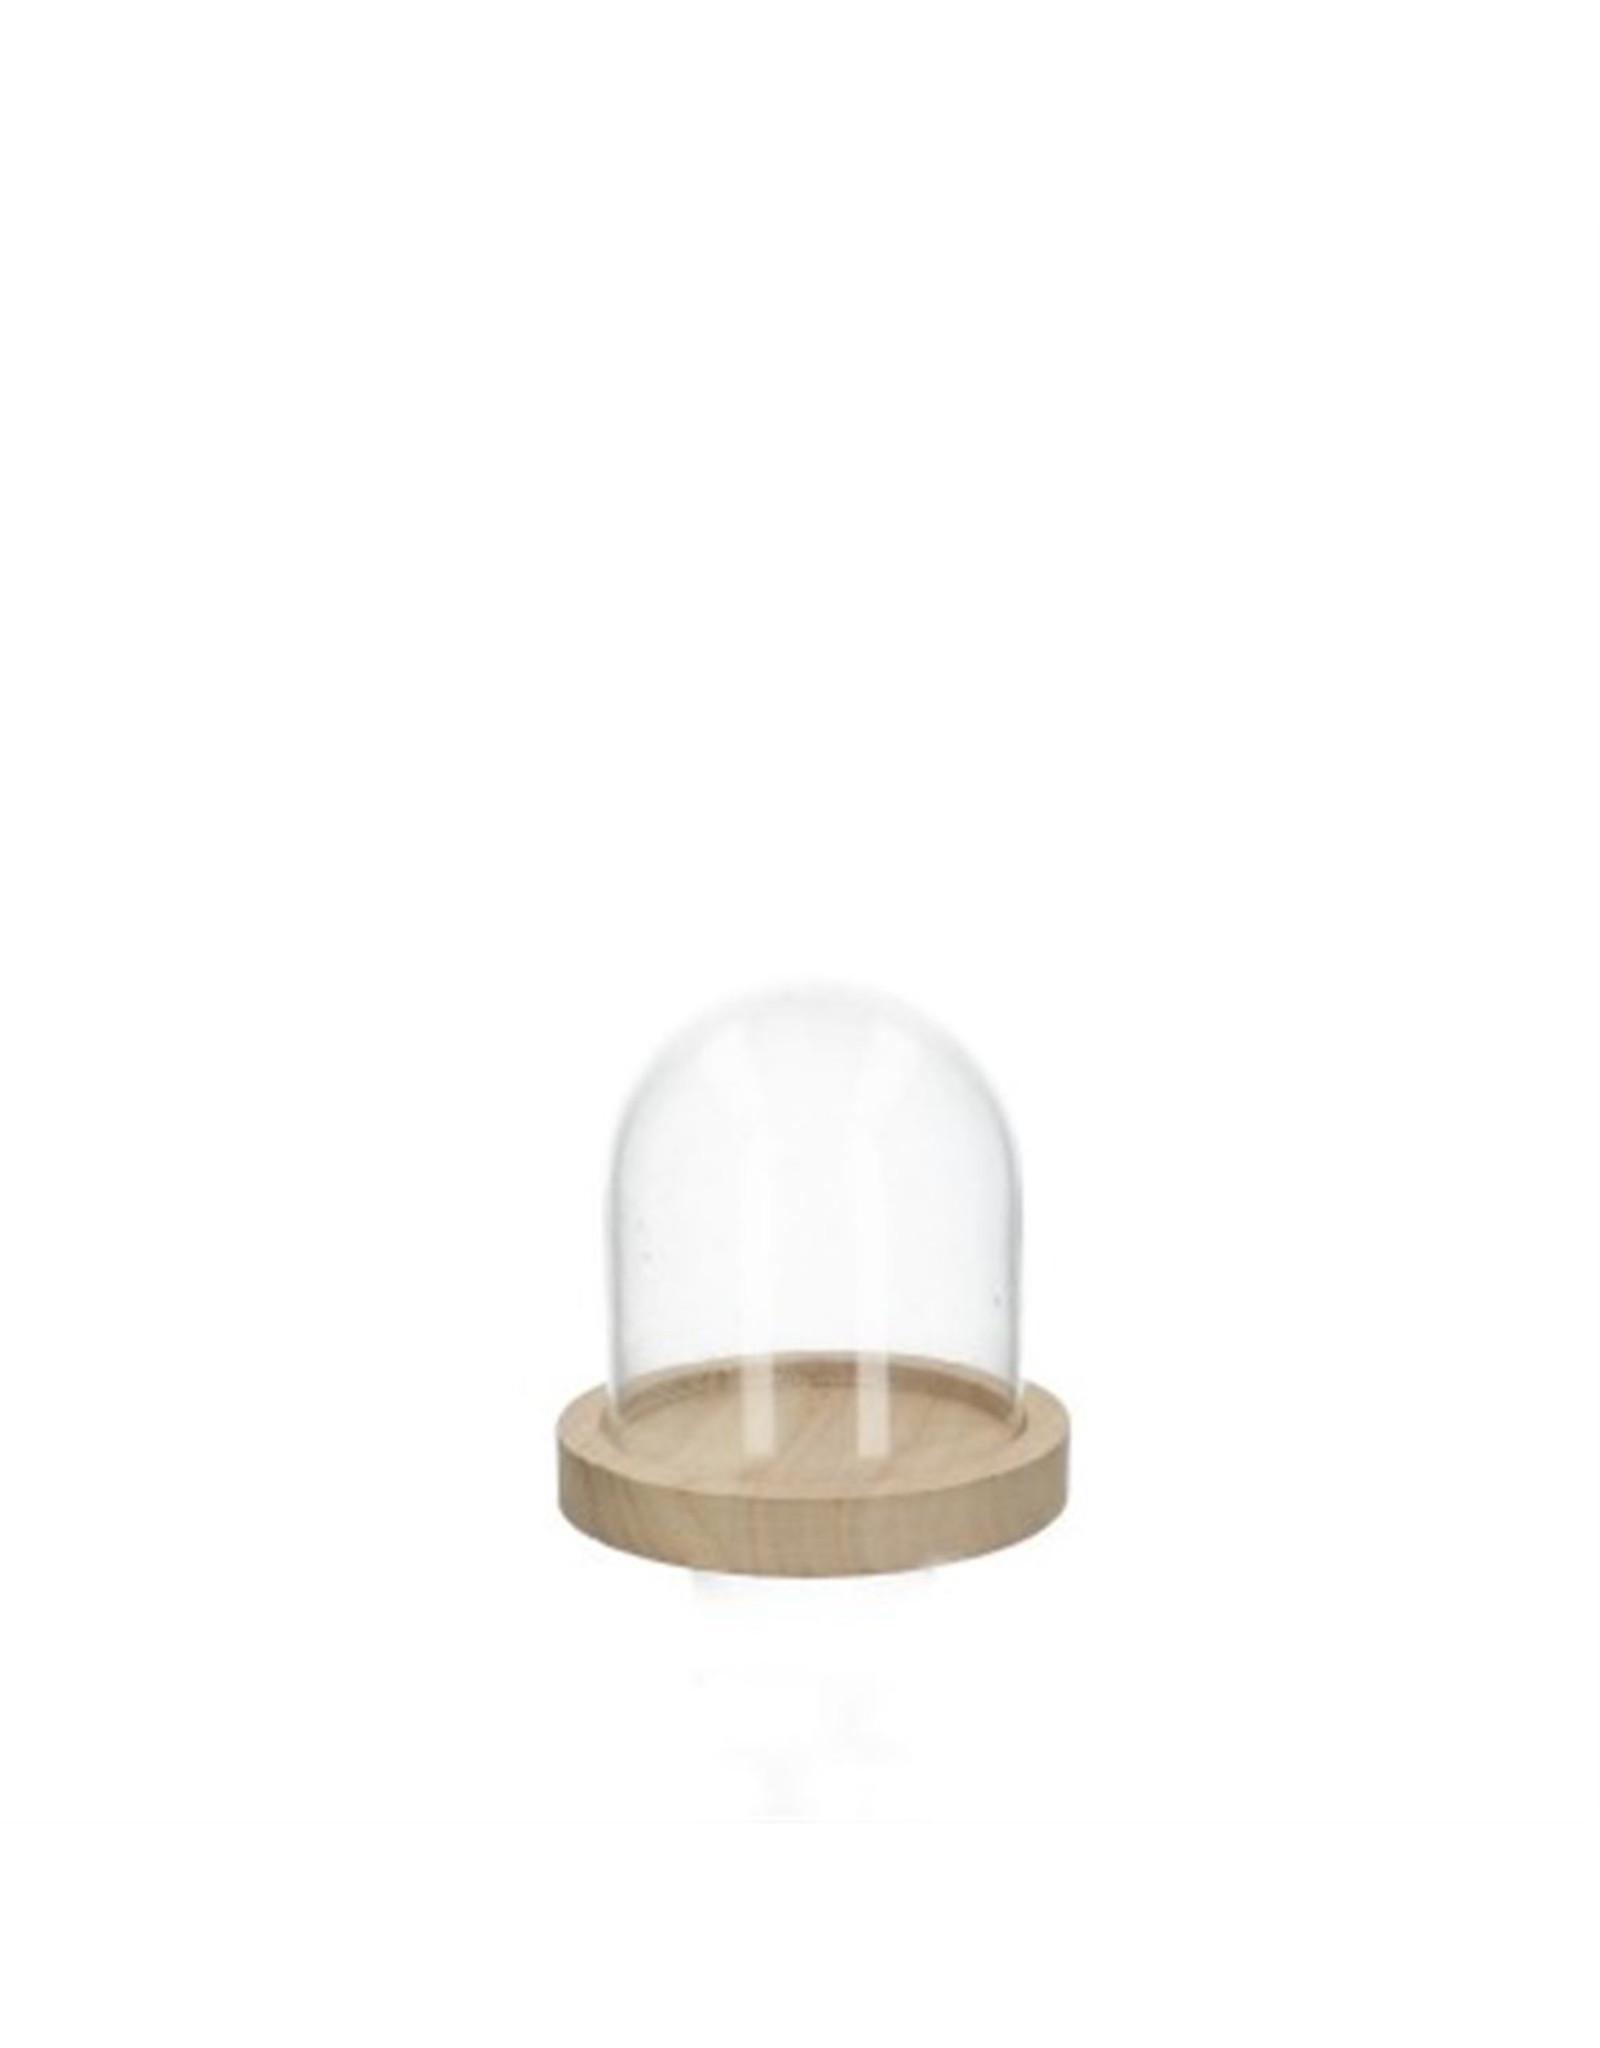 HD Basic Glass Dome W. Wood Base Ø10.0 ↑12.0 (x 4)8